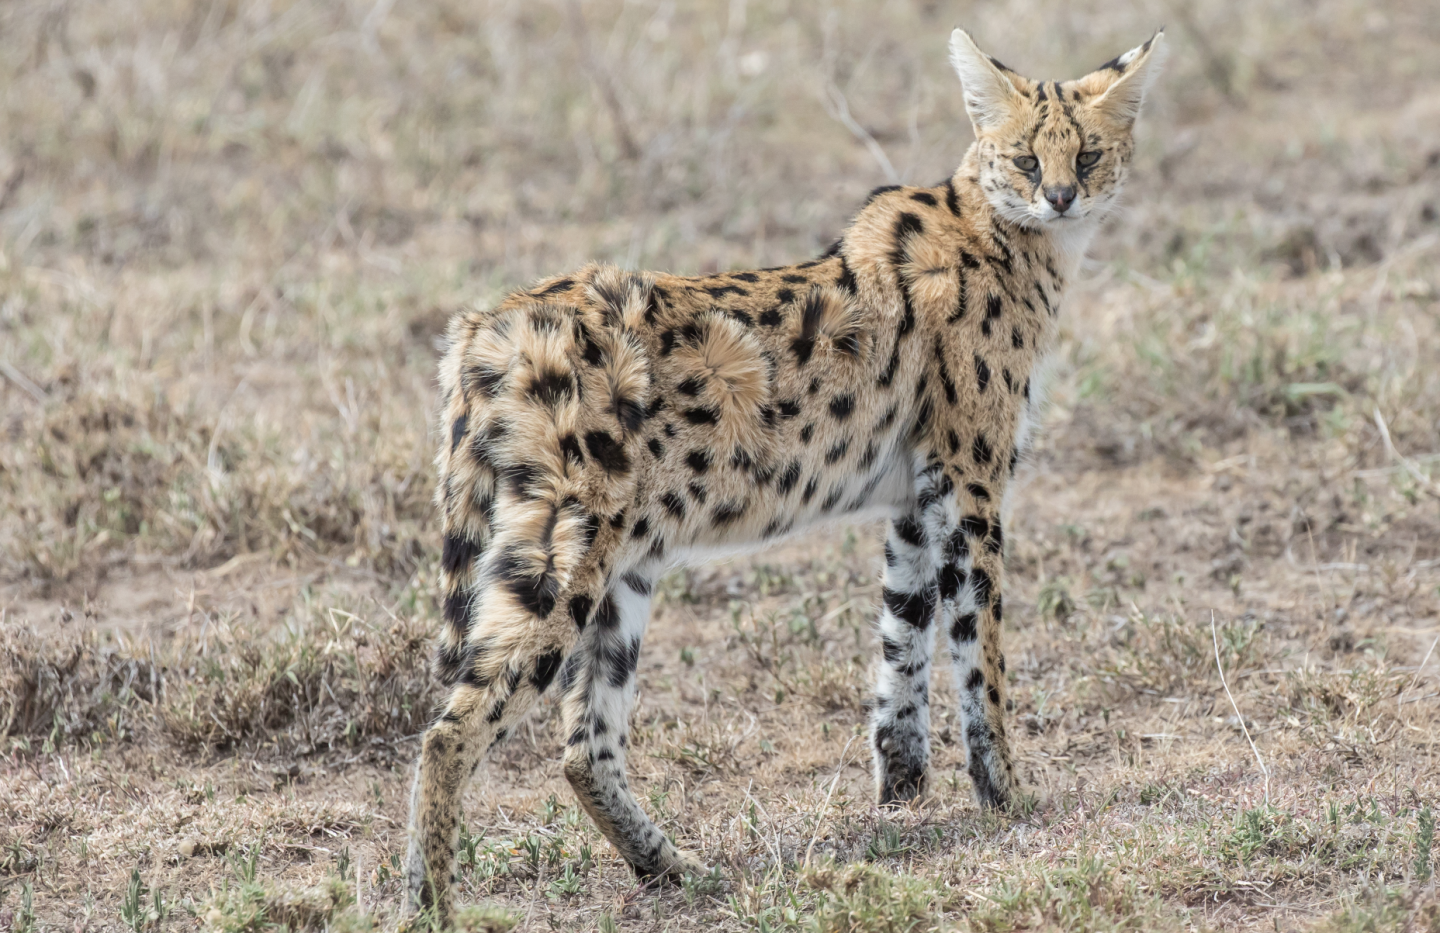 Serval 1